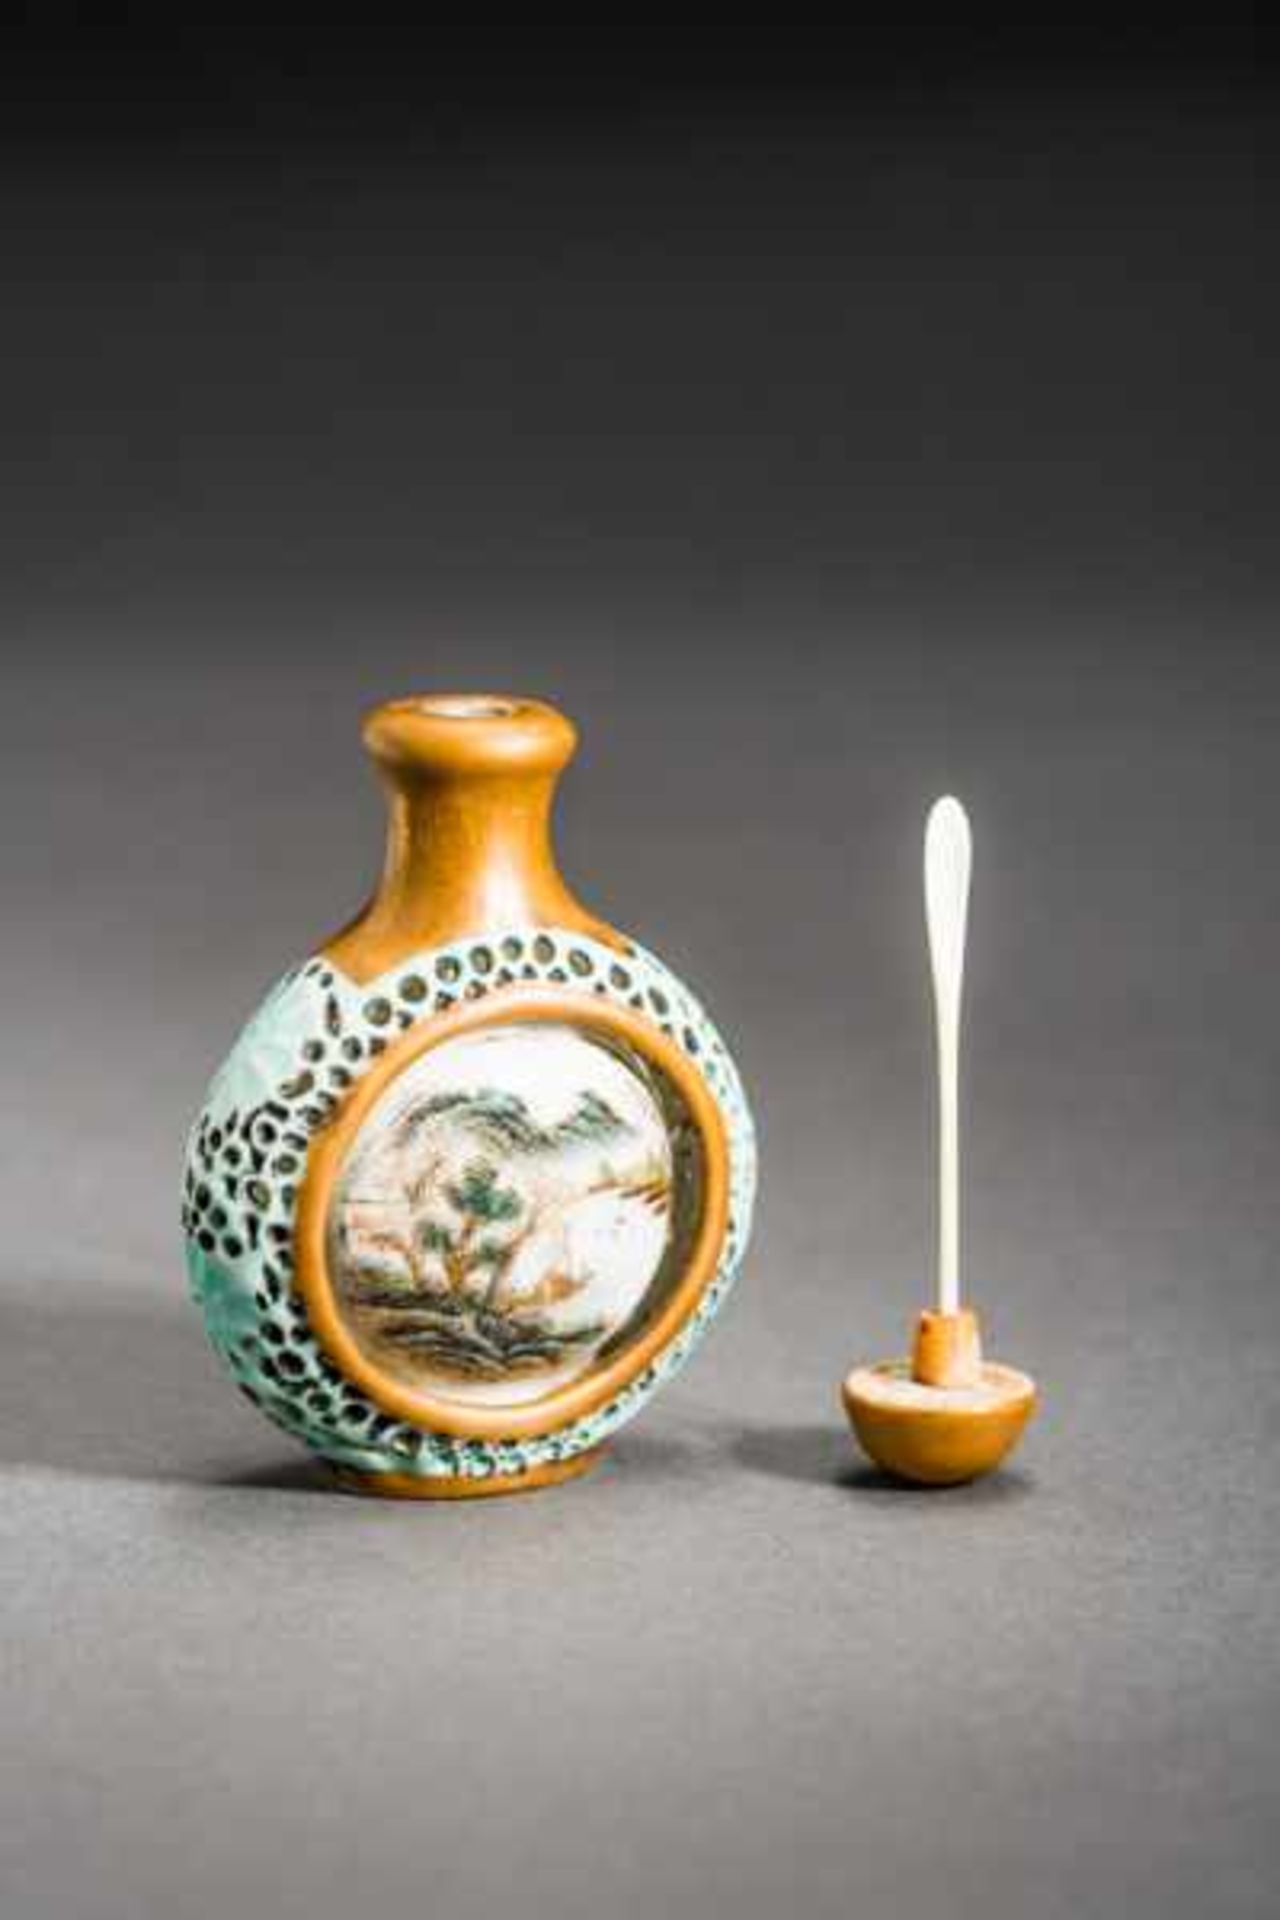 SHANSHUI LANDSCAPE AND POEM Porcelain with paint. Stopper: gilded porcelain, ivory spoon. China, - Bild 6 aus 6